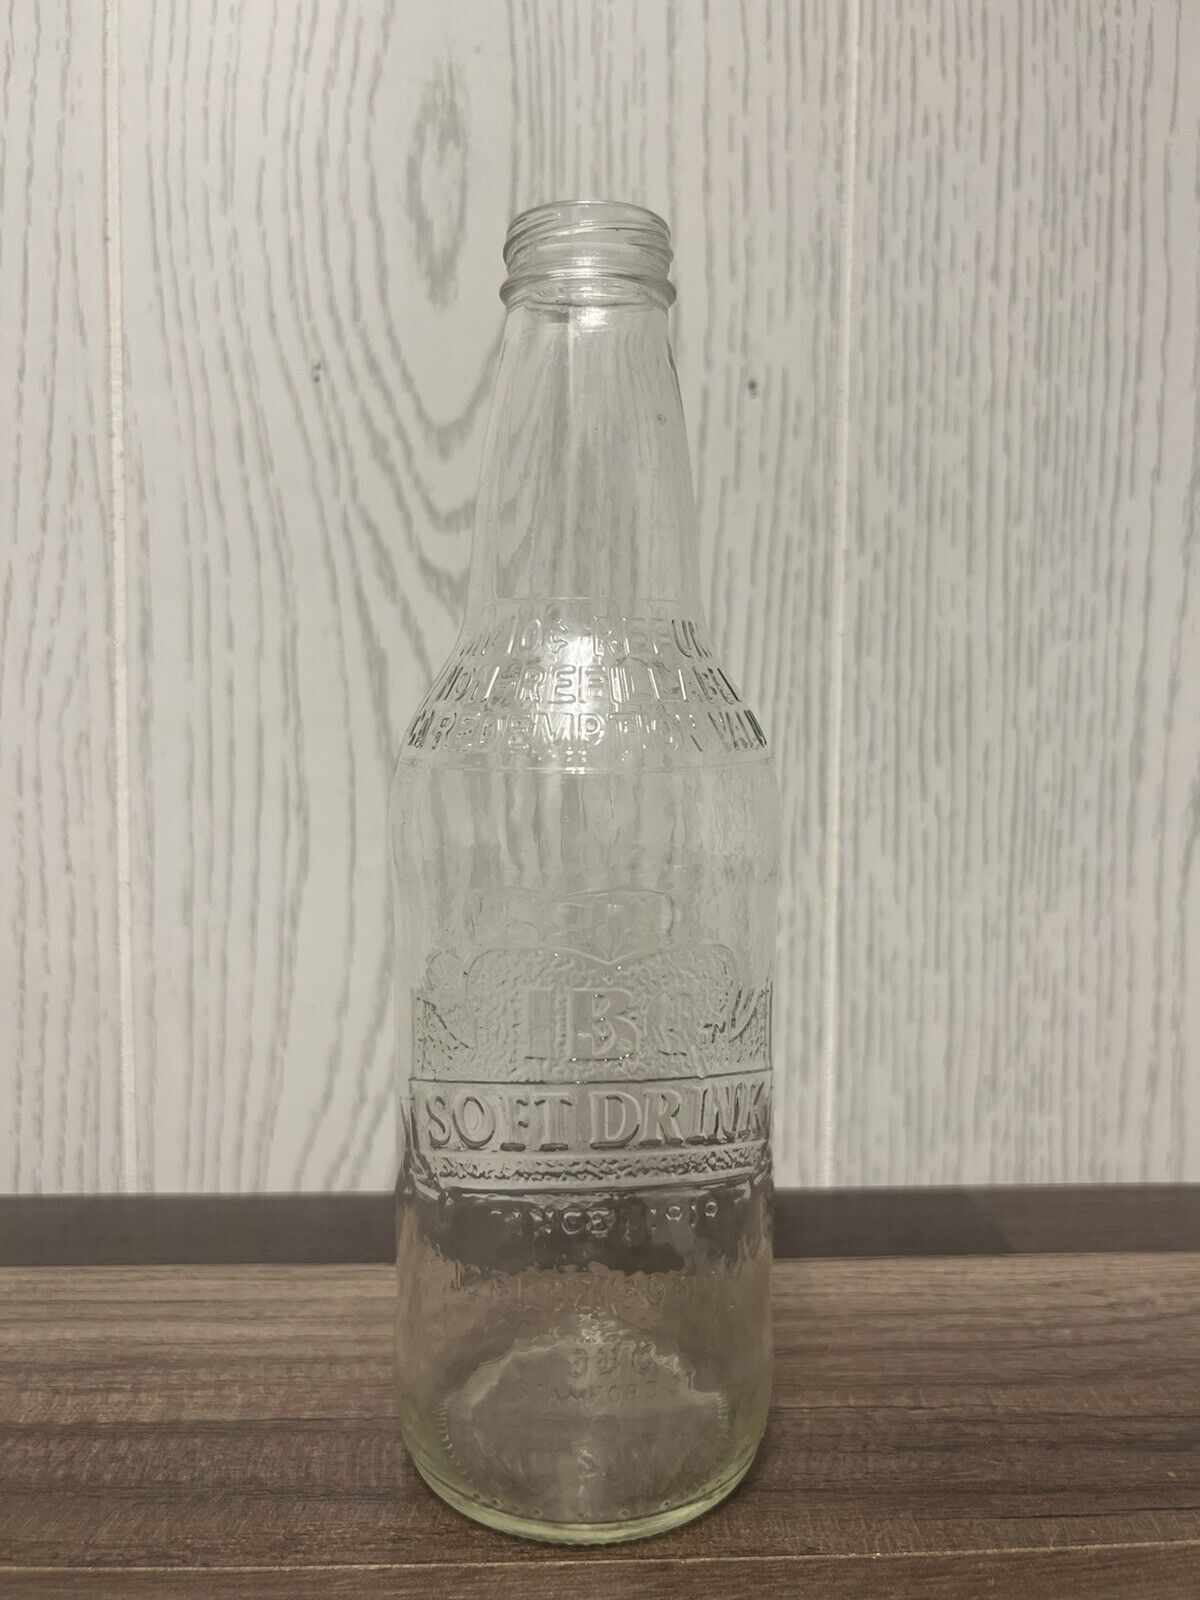 IBC SOFT DRINK Vintage Glass Root Beer Bottle 12 oz. 5 Cent Refund Twist Top